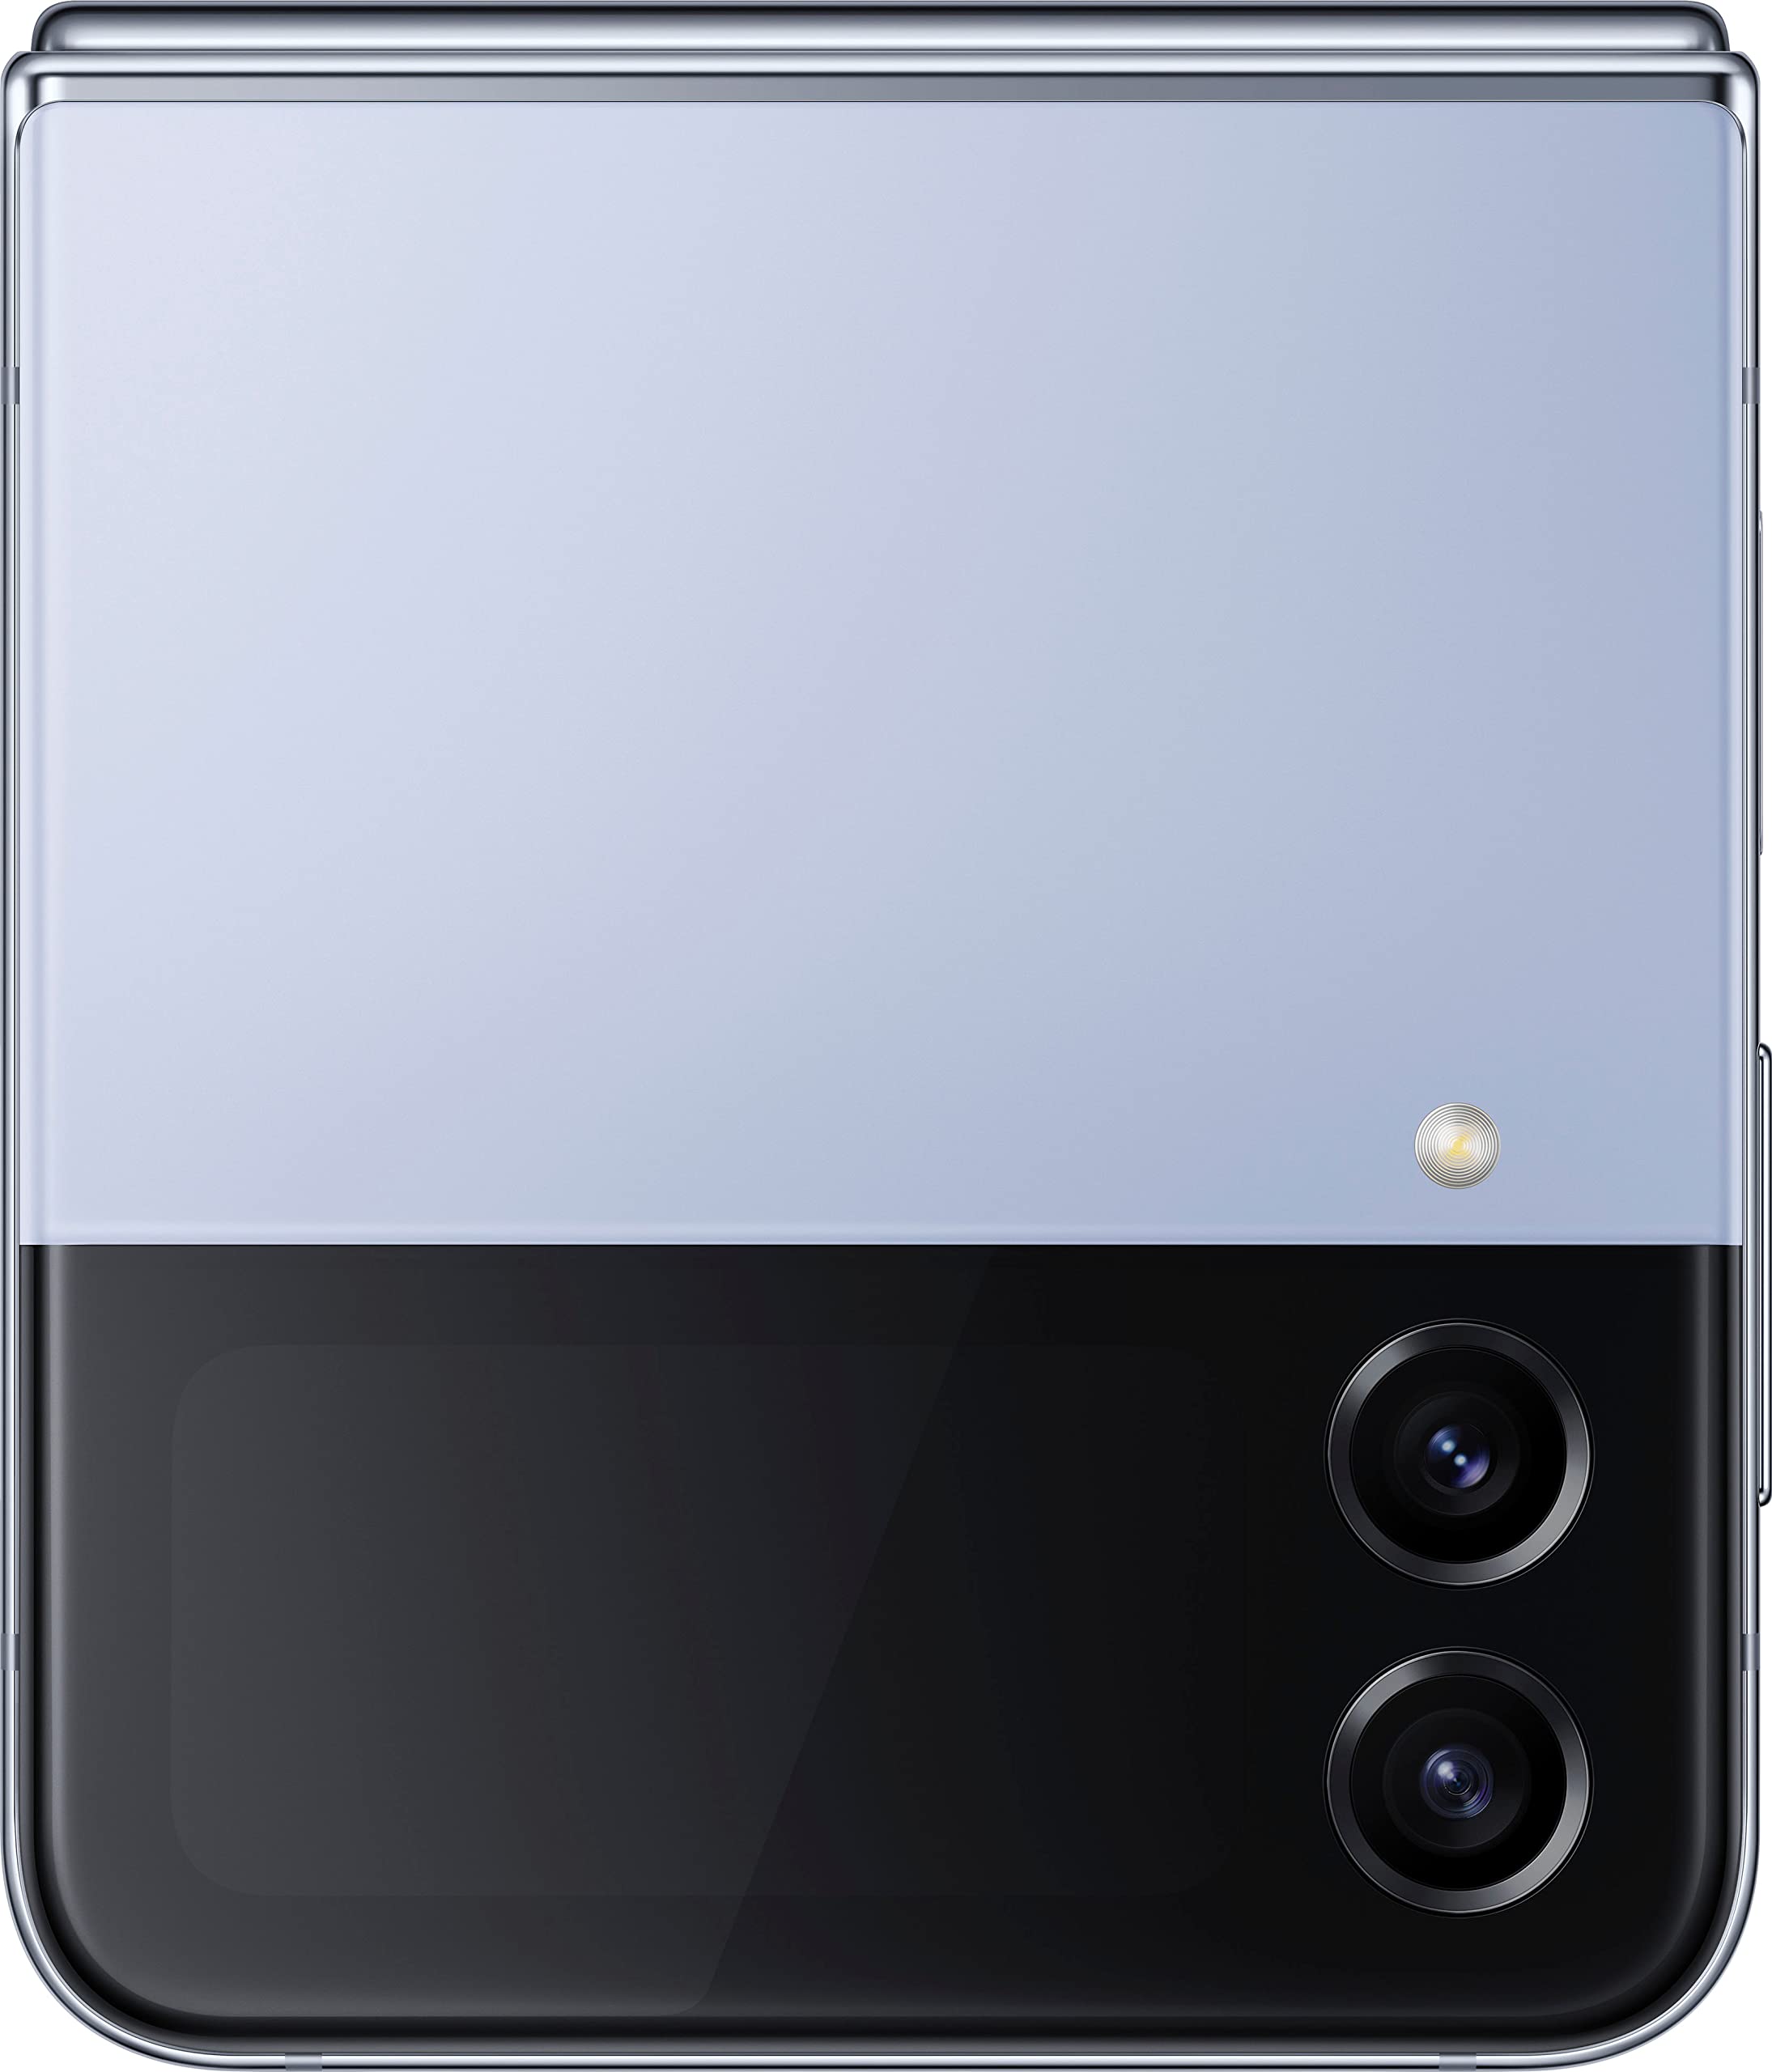 SAMSUNG Galaxy Z Flip4 5G 512GB 8GB RAM Factory Unlocked (GSM Only | No CDMA - not Compatible with Verizon/Sprint) - Blue